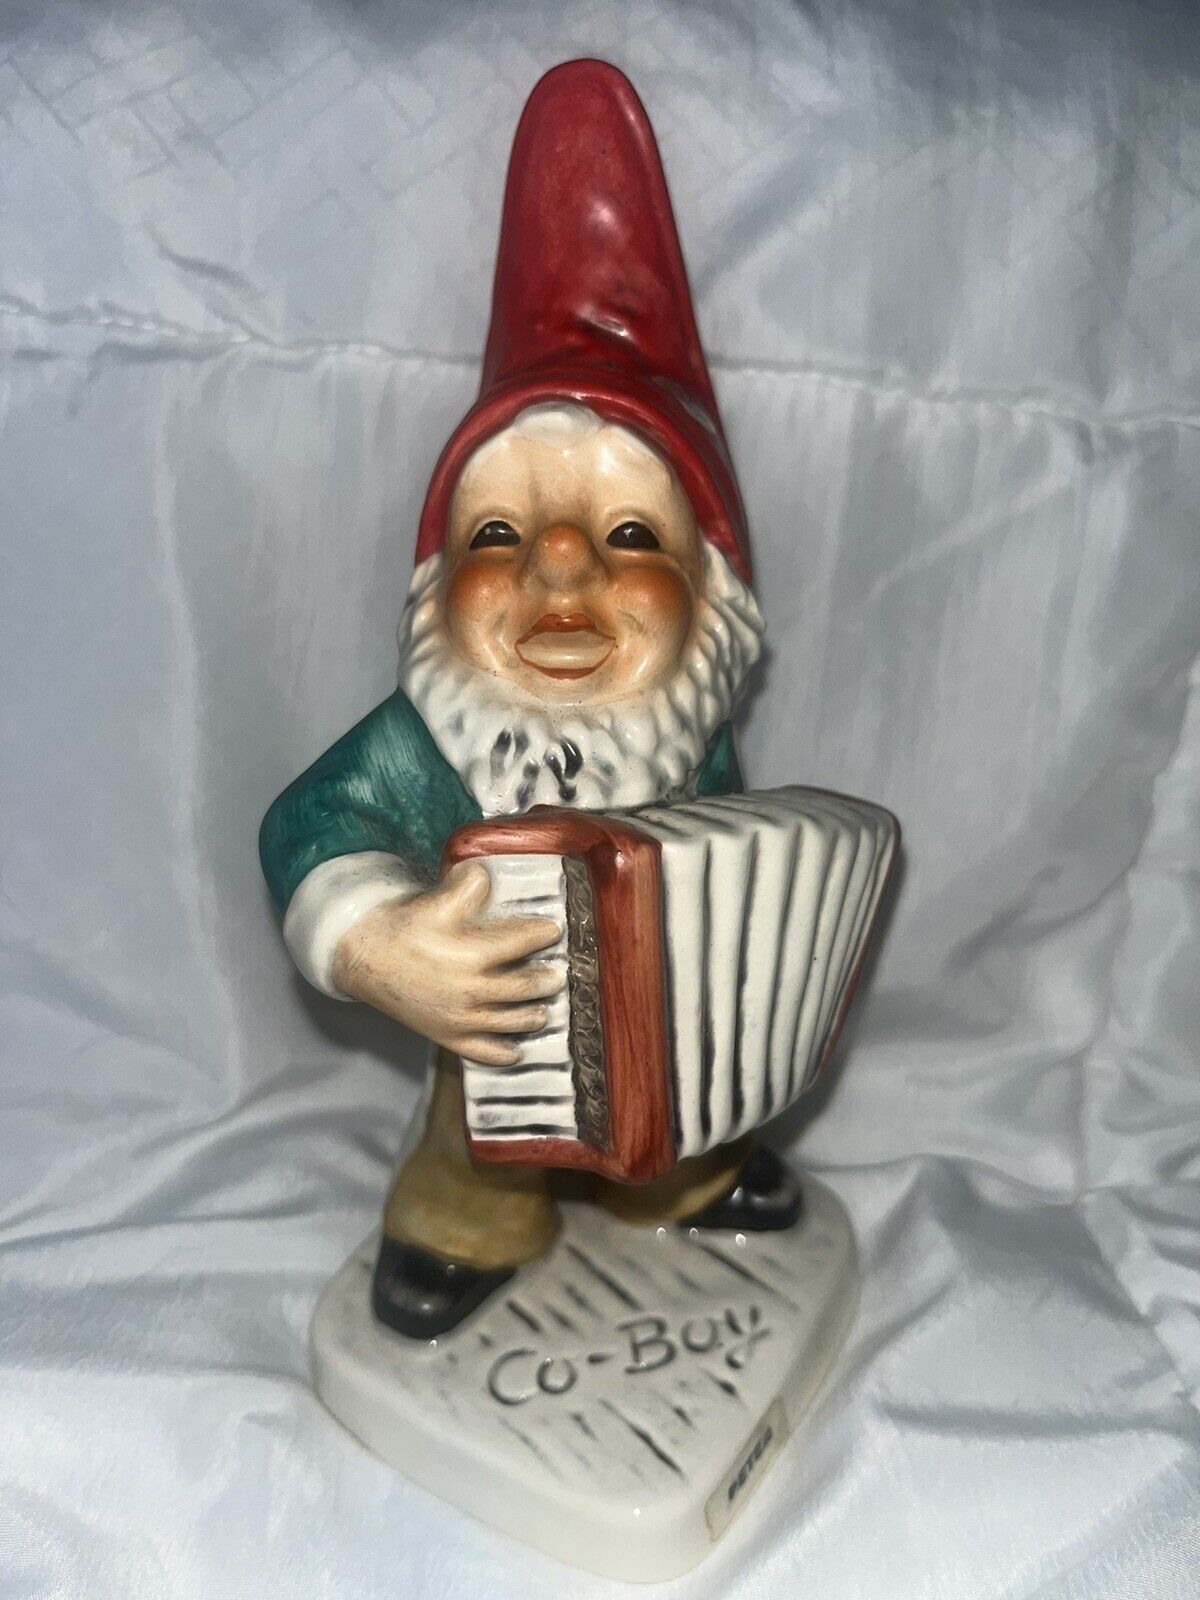 Peter Accordion Player Co Boy Gnome 1980 Goebel West Germany Figurine  17541 18